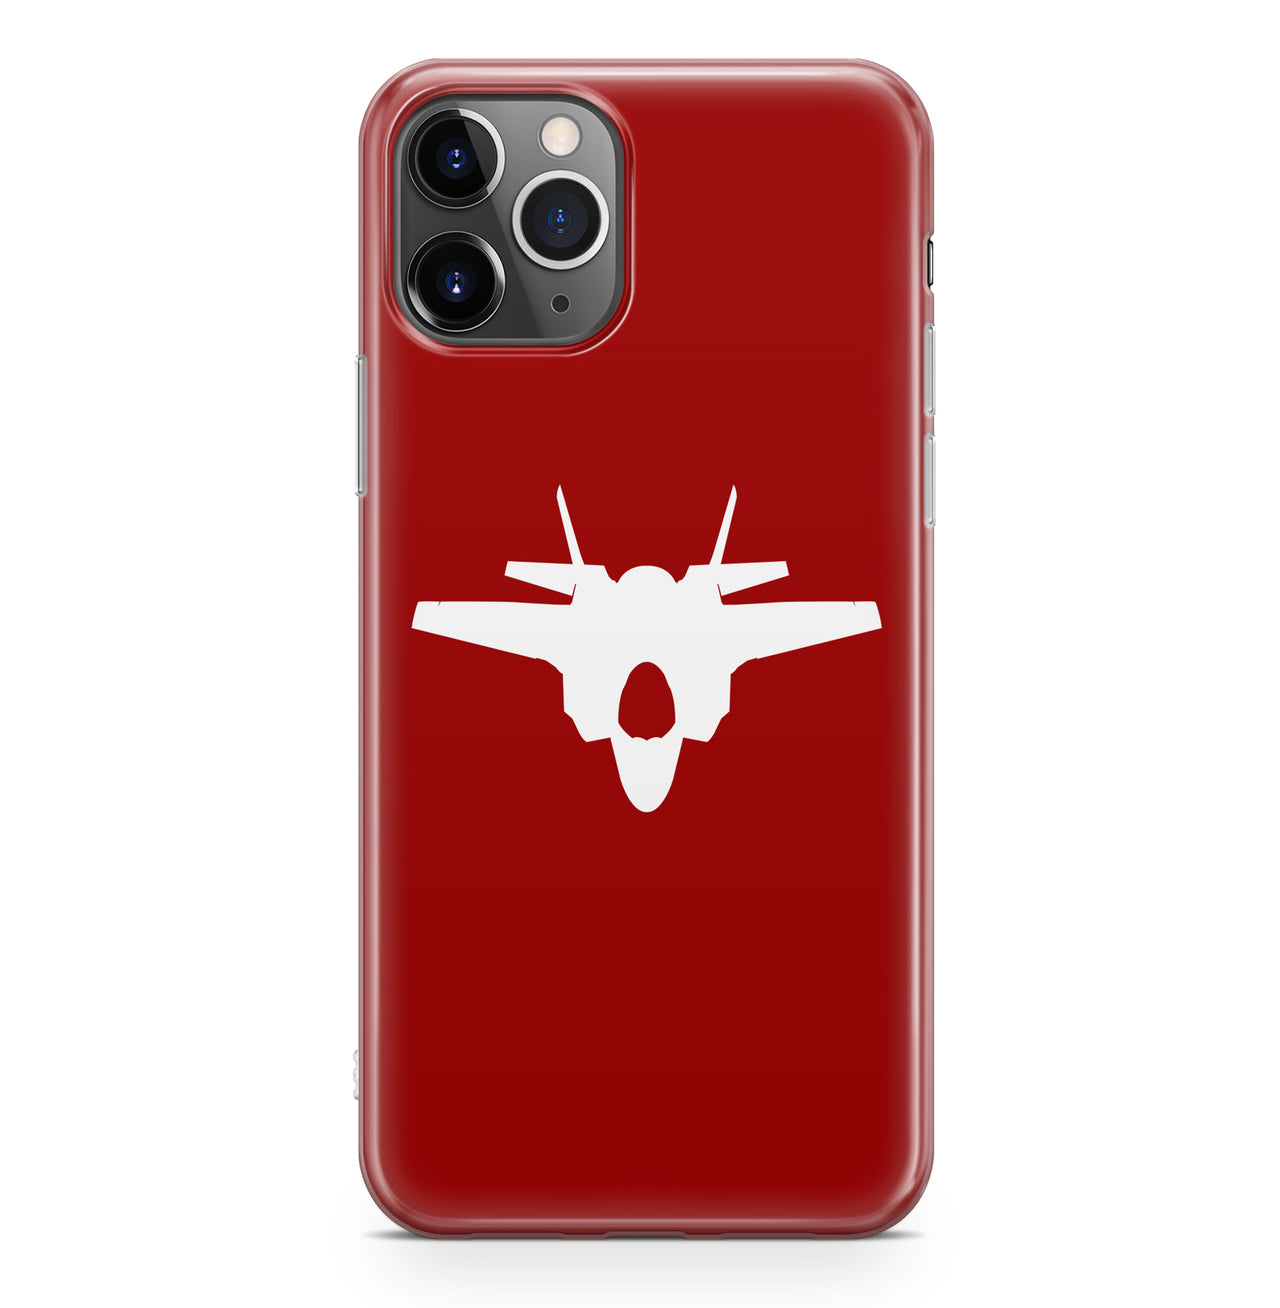 Lockheed Martin F-35 Lightning II Silhouette Designed iPhone Cases